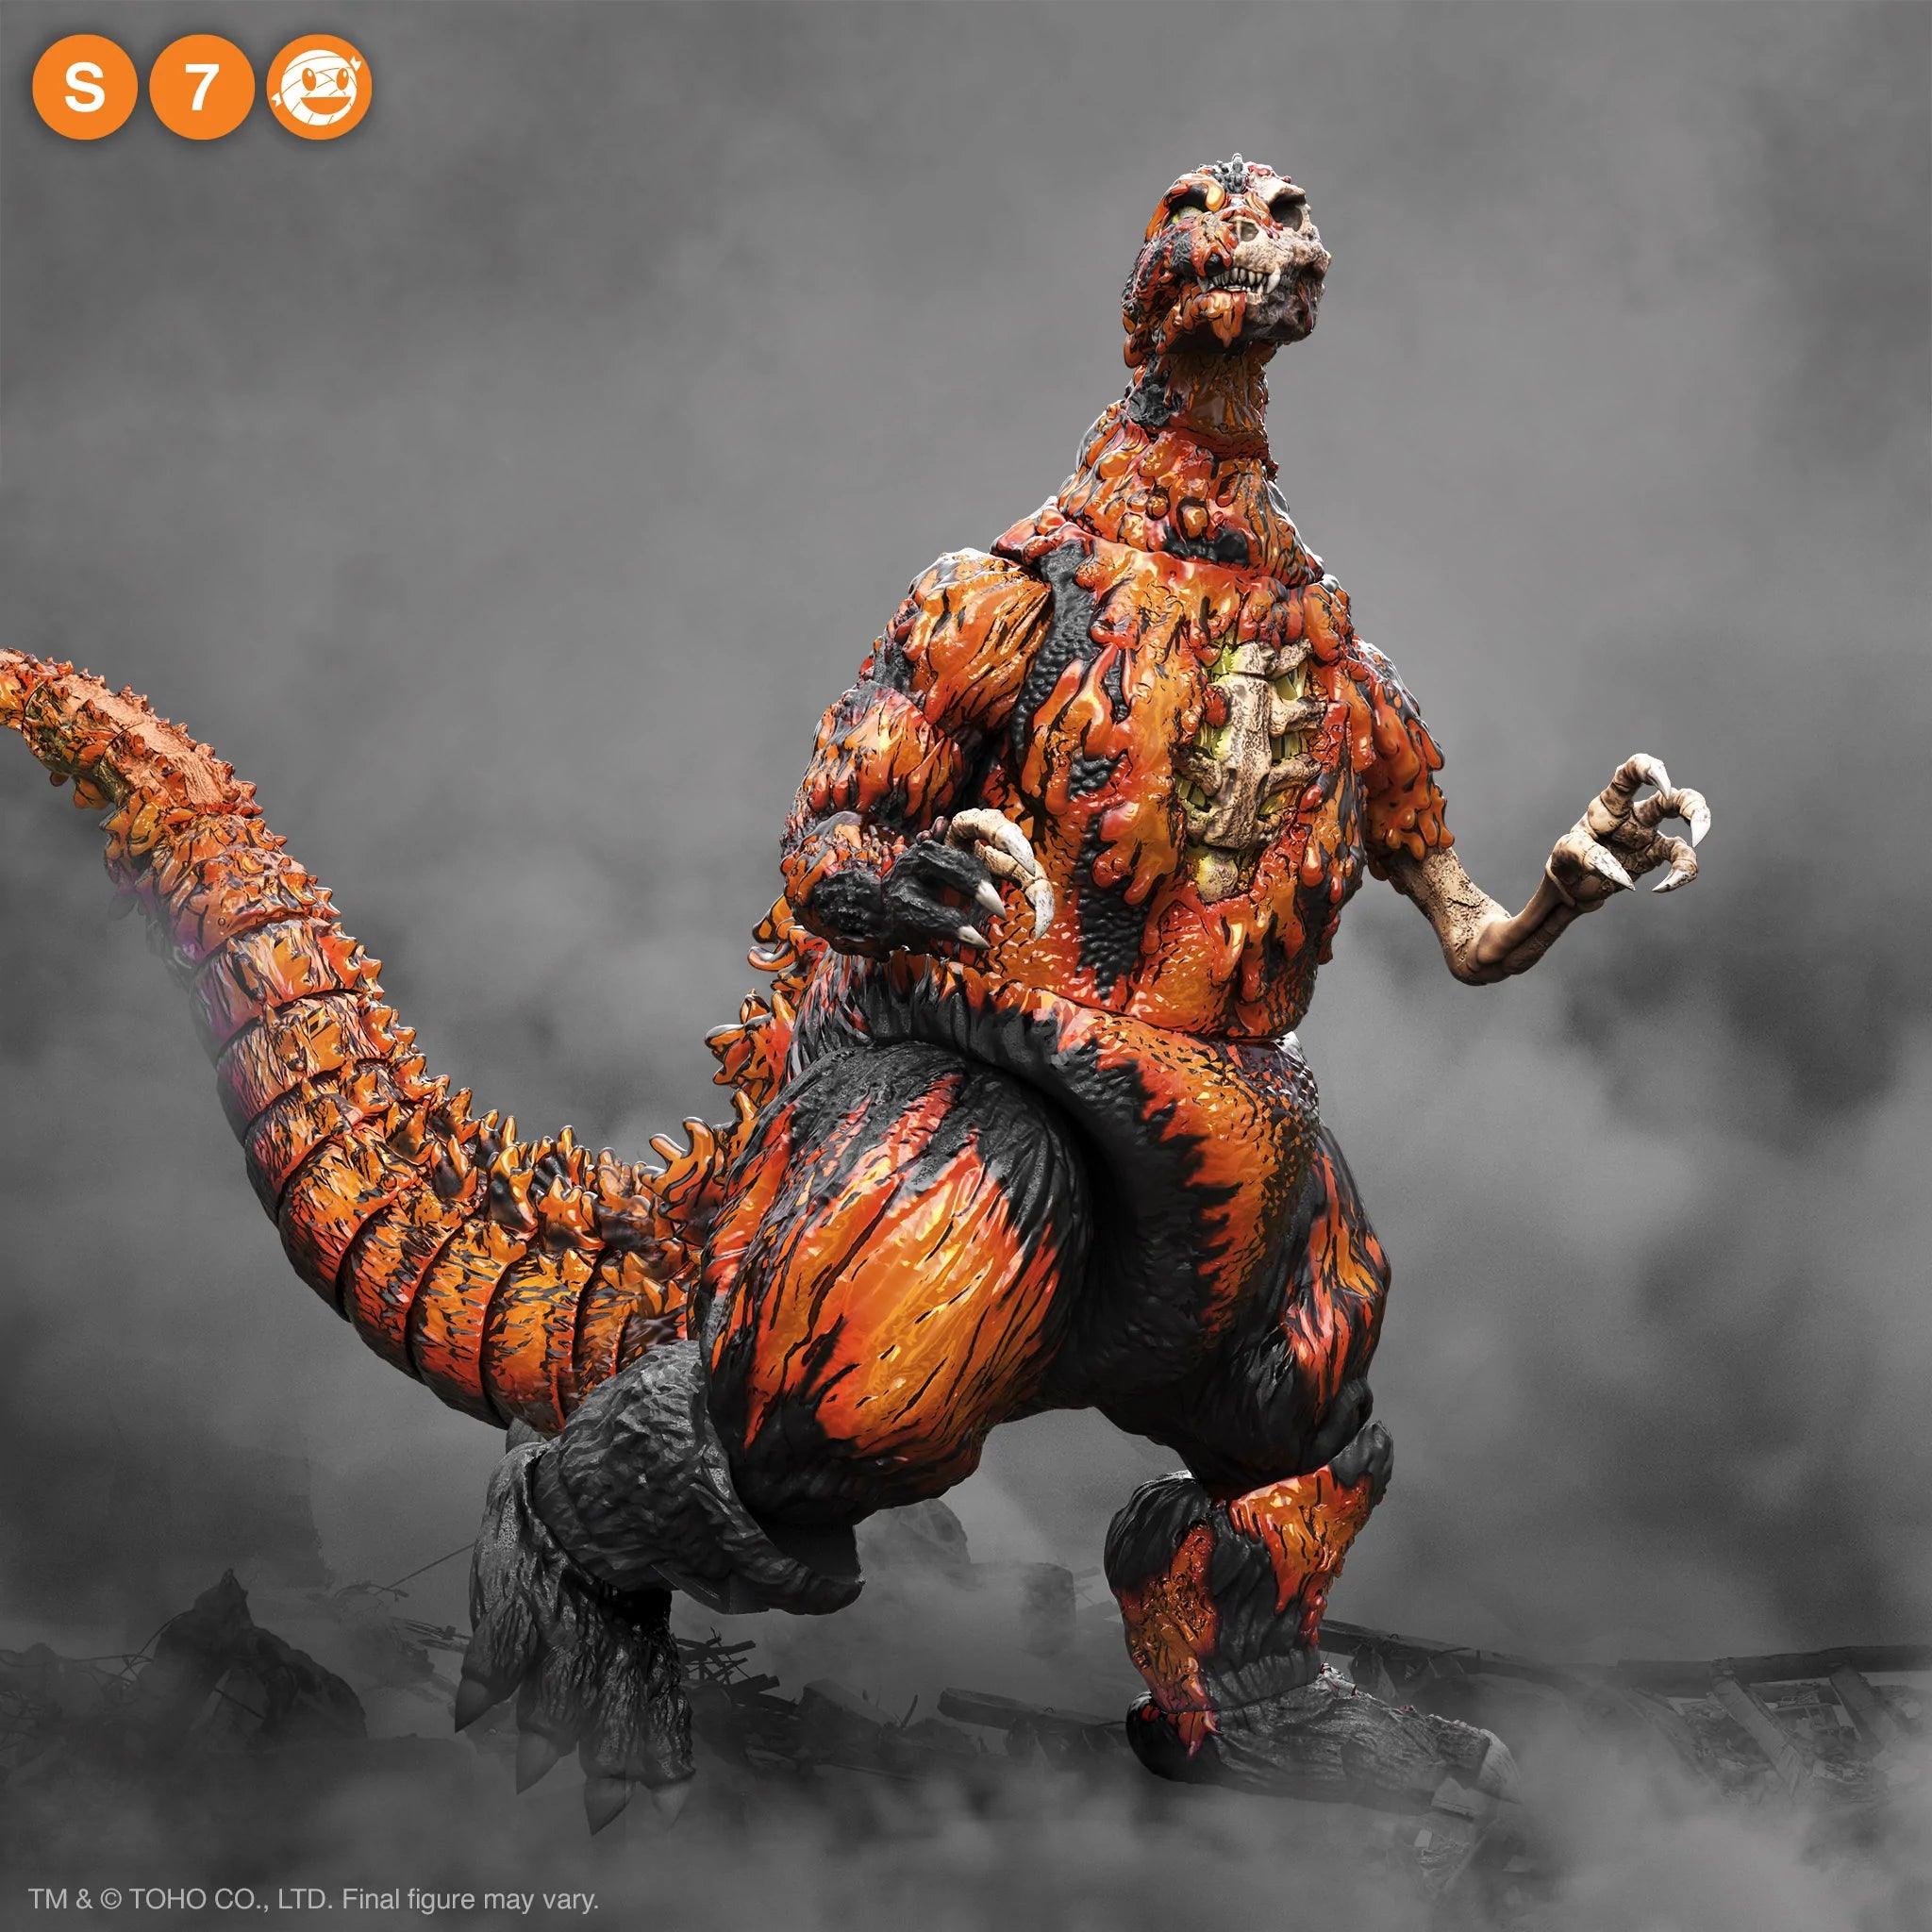 NEW DIMENSION! CRAYON SHIN-CHAN THE MOVIE Press Notes and Images From Toho, Godzilla - Toho